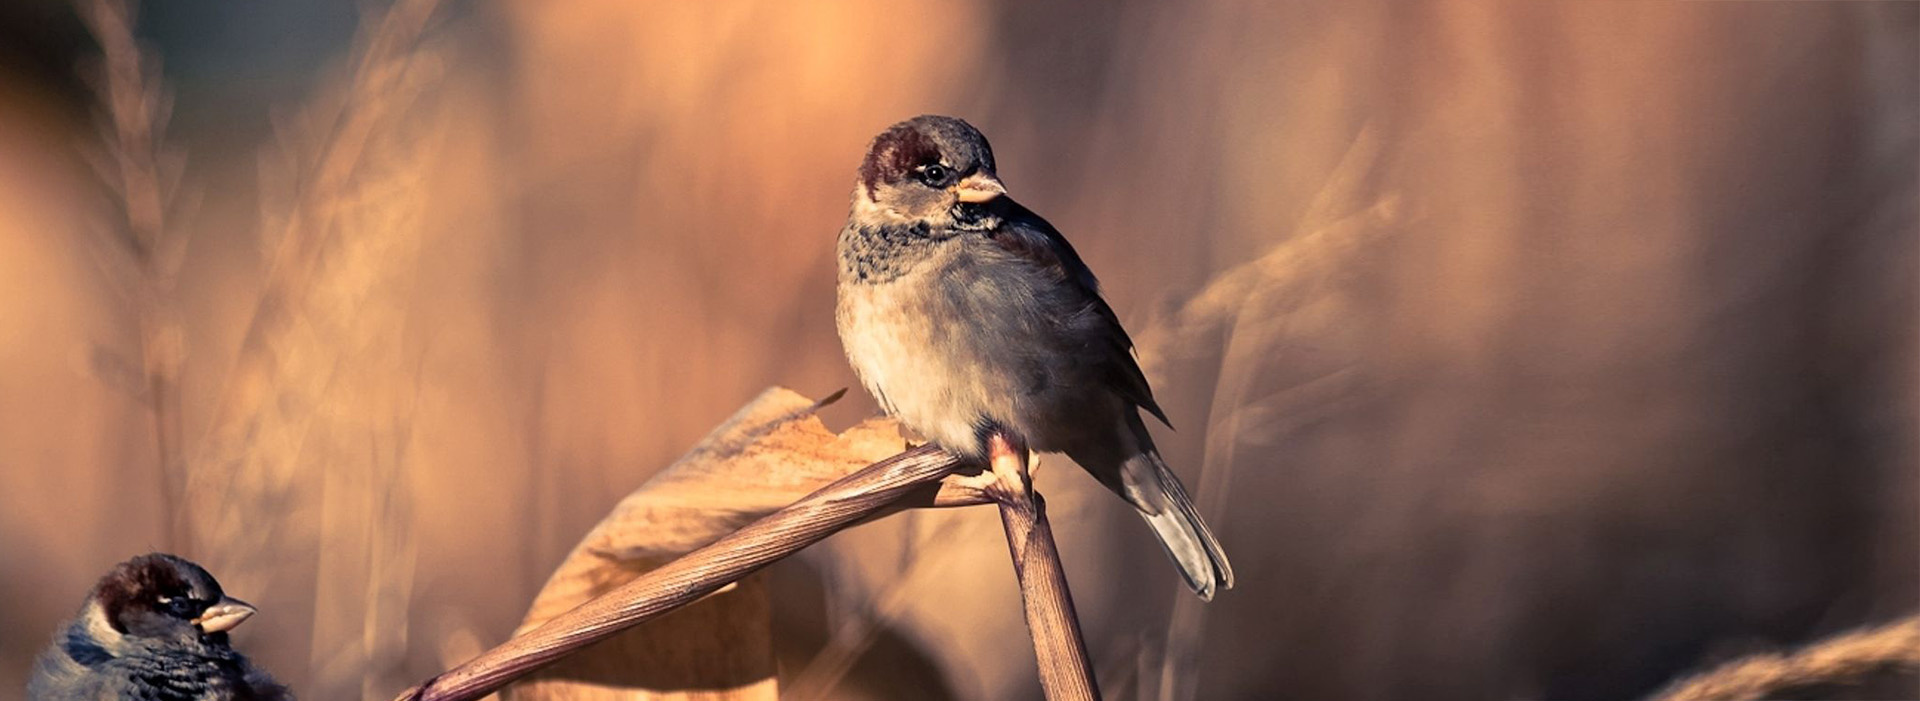 Movie poster Sparrows in focus